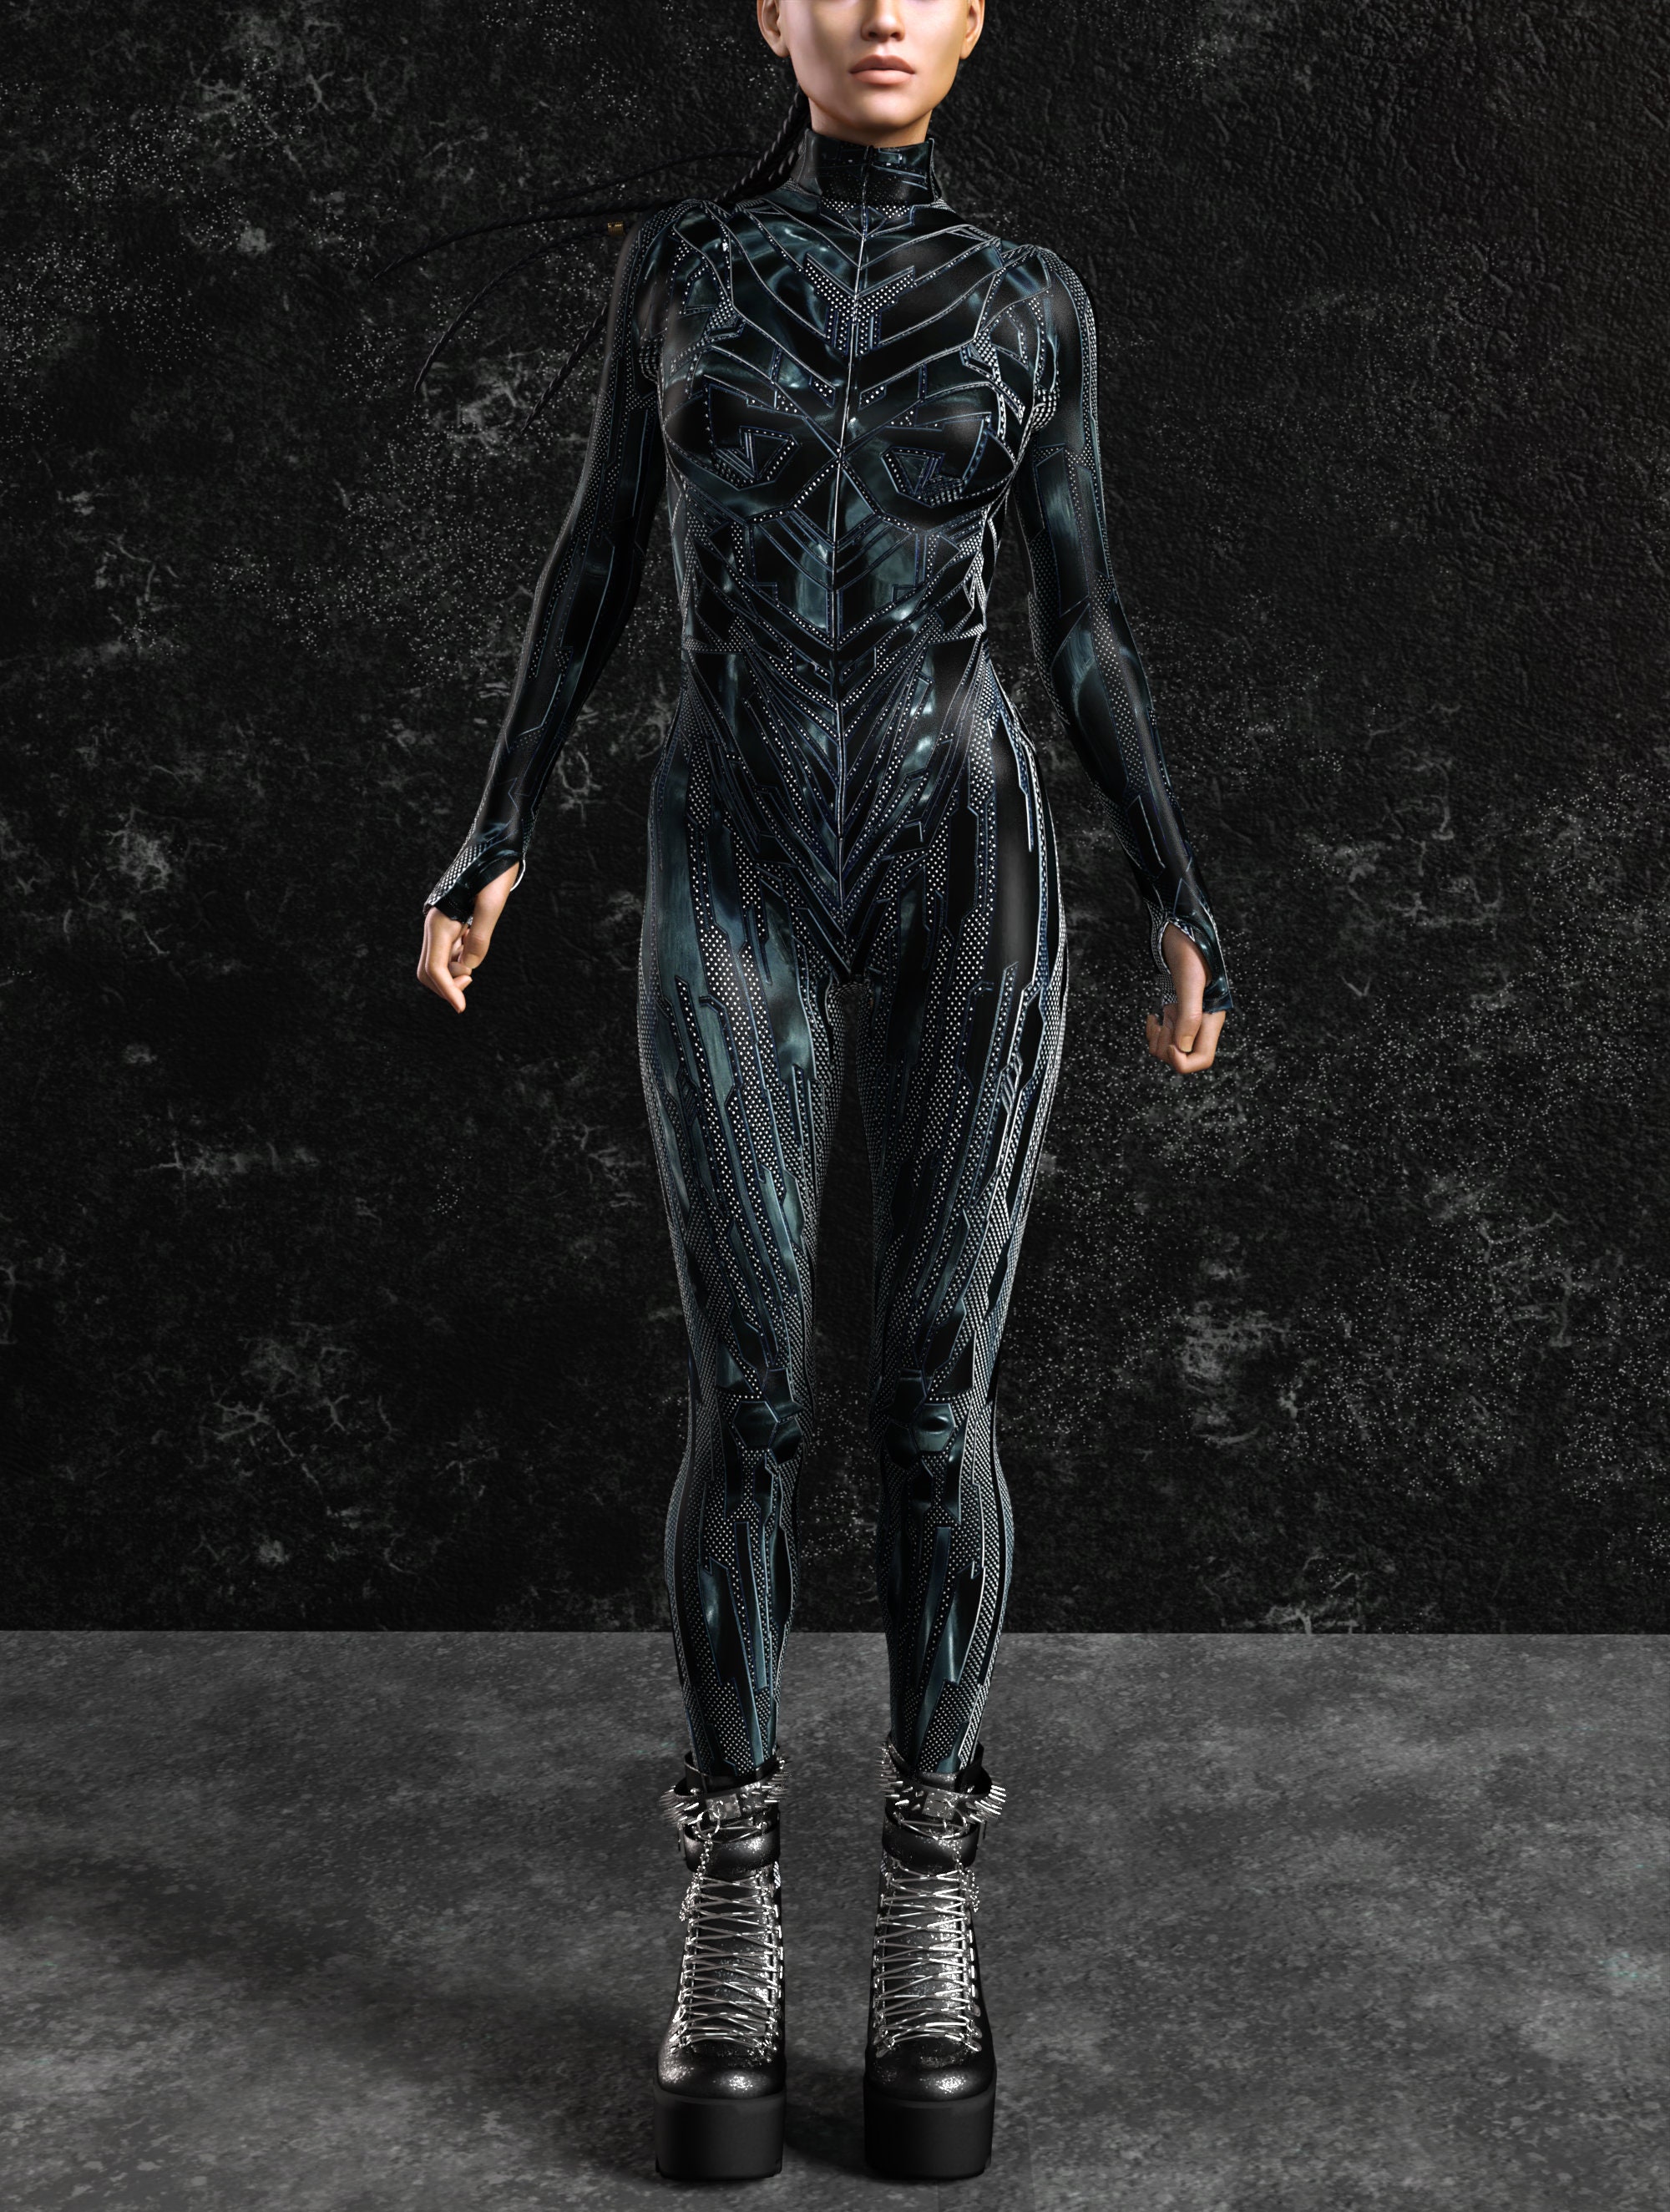 Deuce Gorgon Costume, Carbon Costume